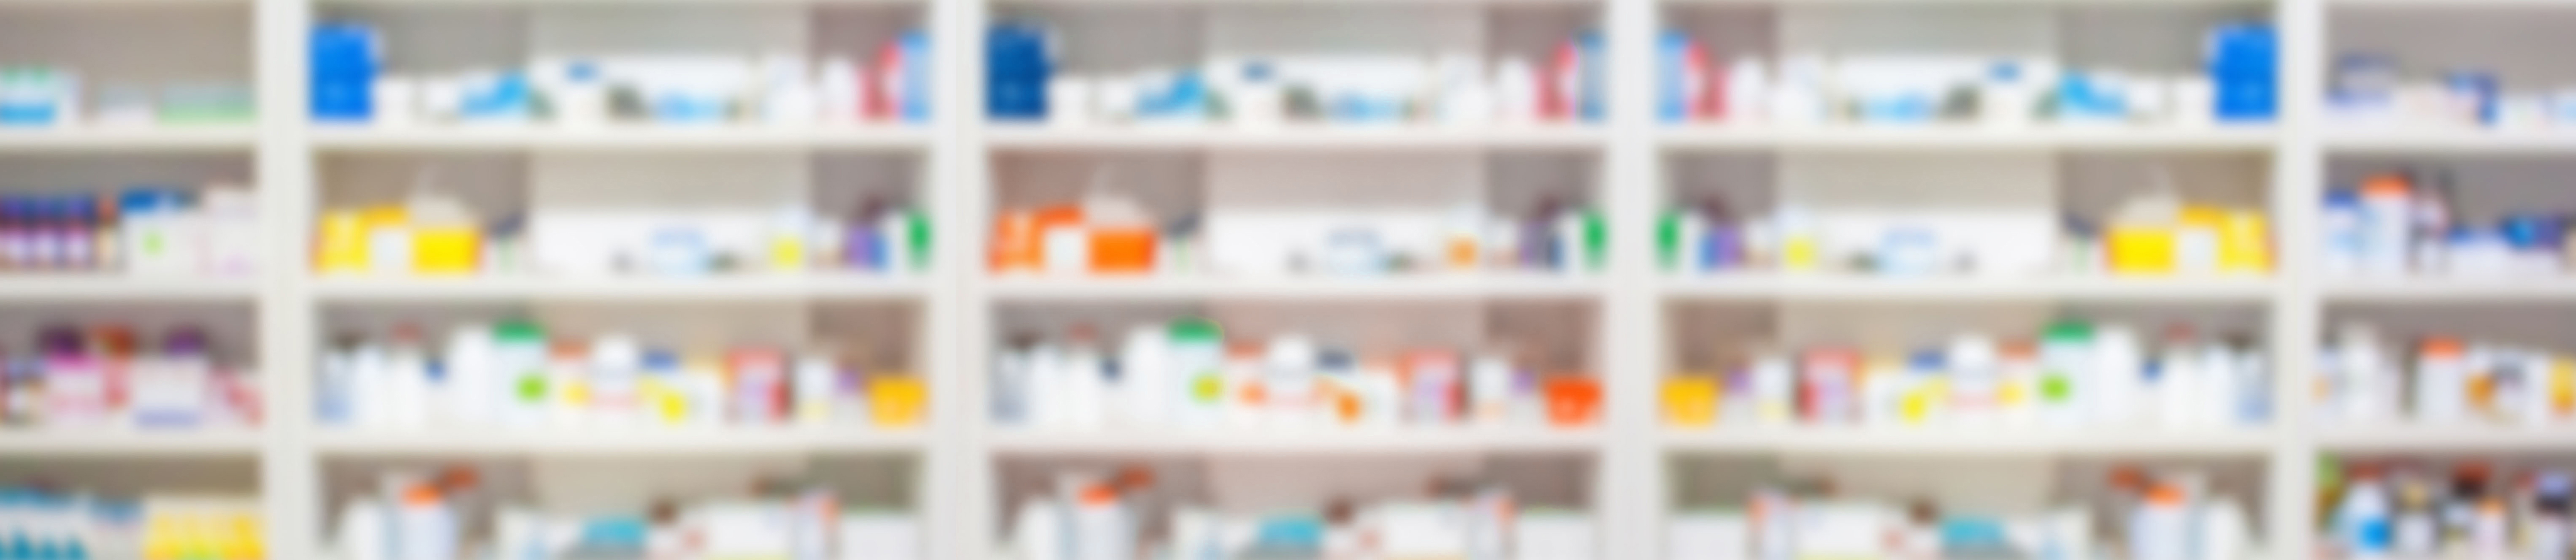 Pharmacy shelves_blurred_wide